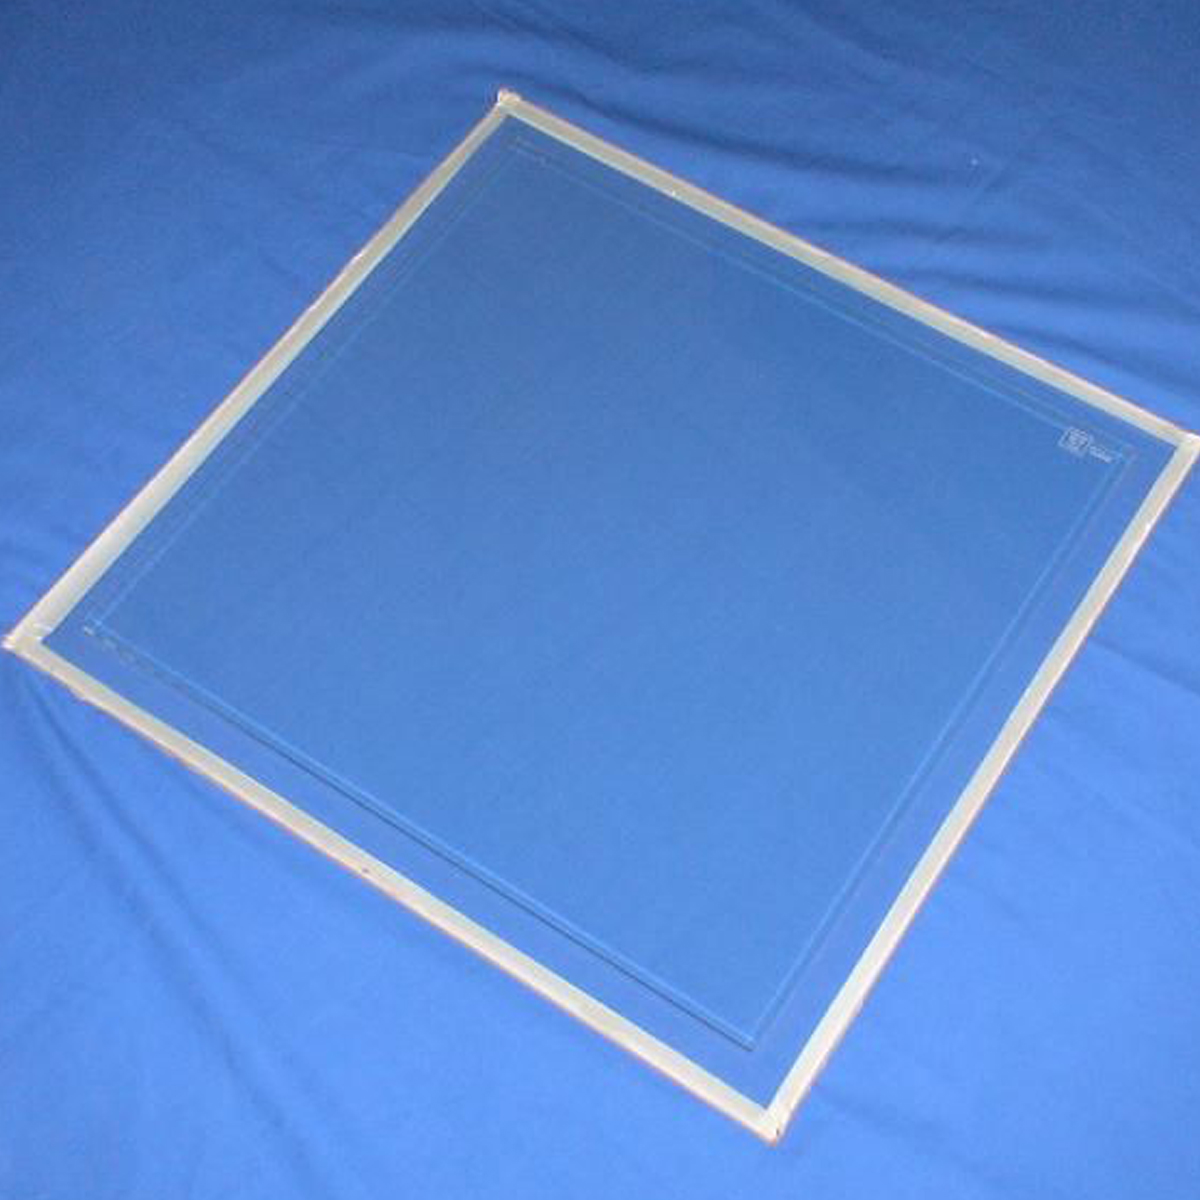 230mm x 255mm 3D Printer Glass Mirror Print Bed Plate Surface Reprap Prusa MK42